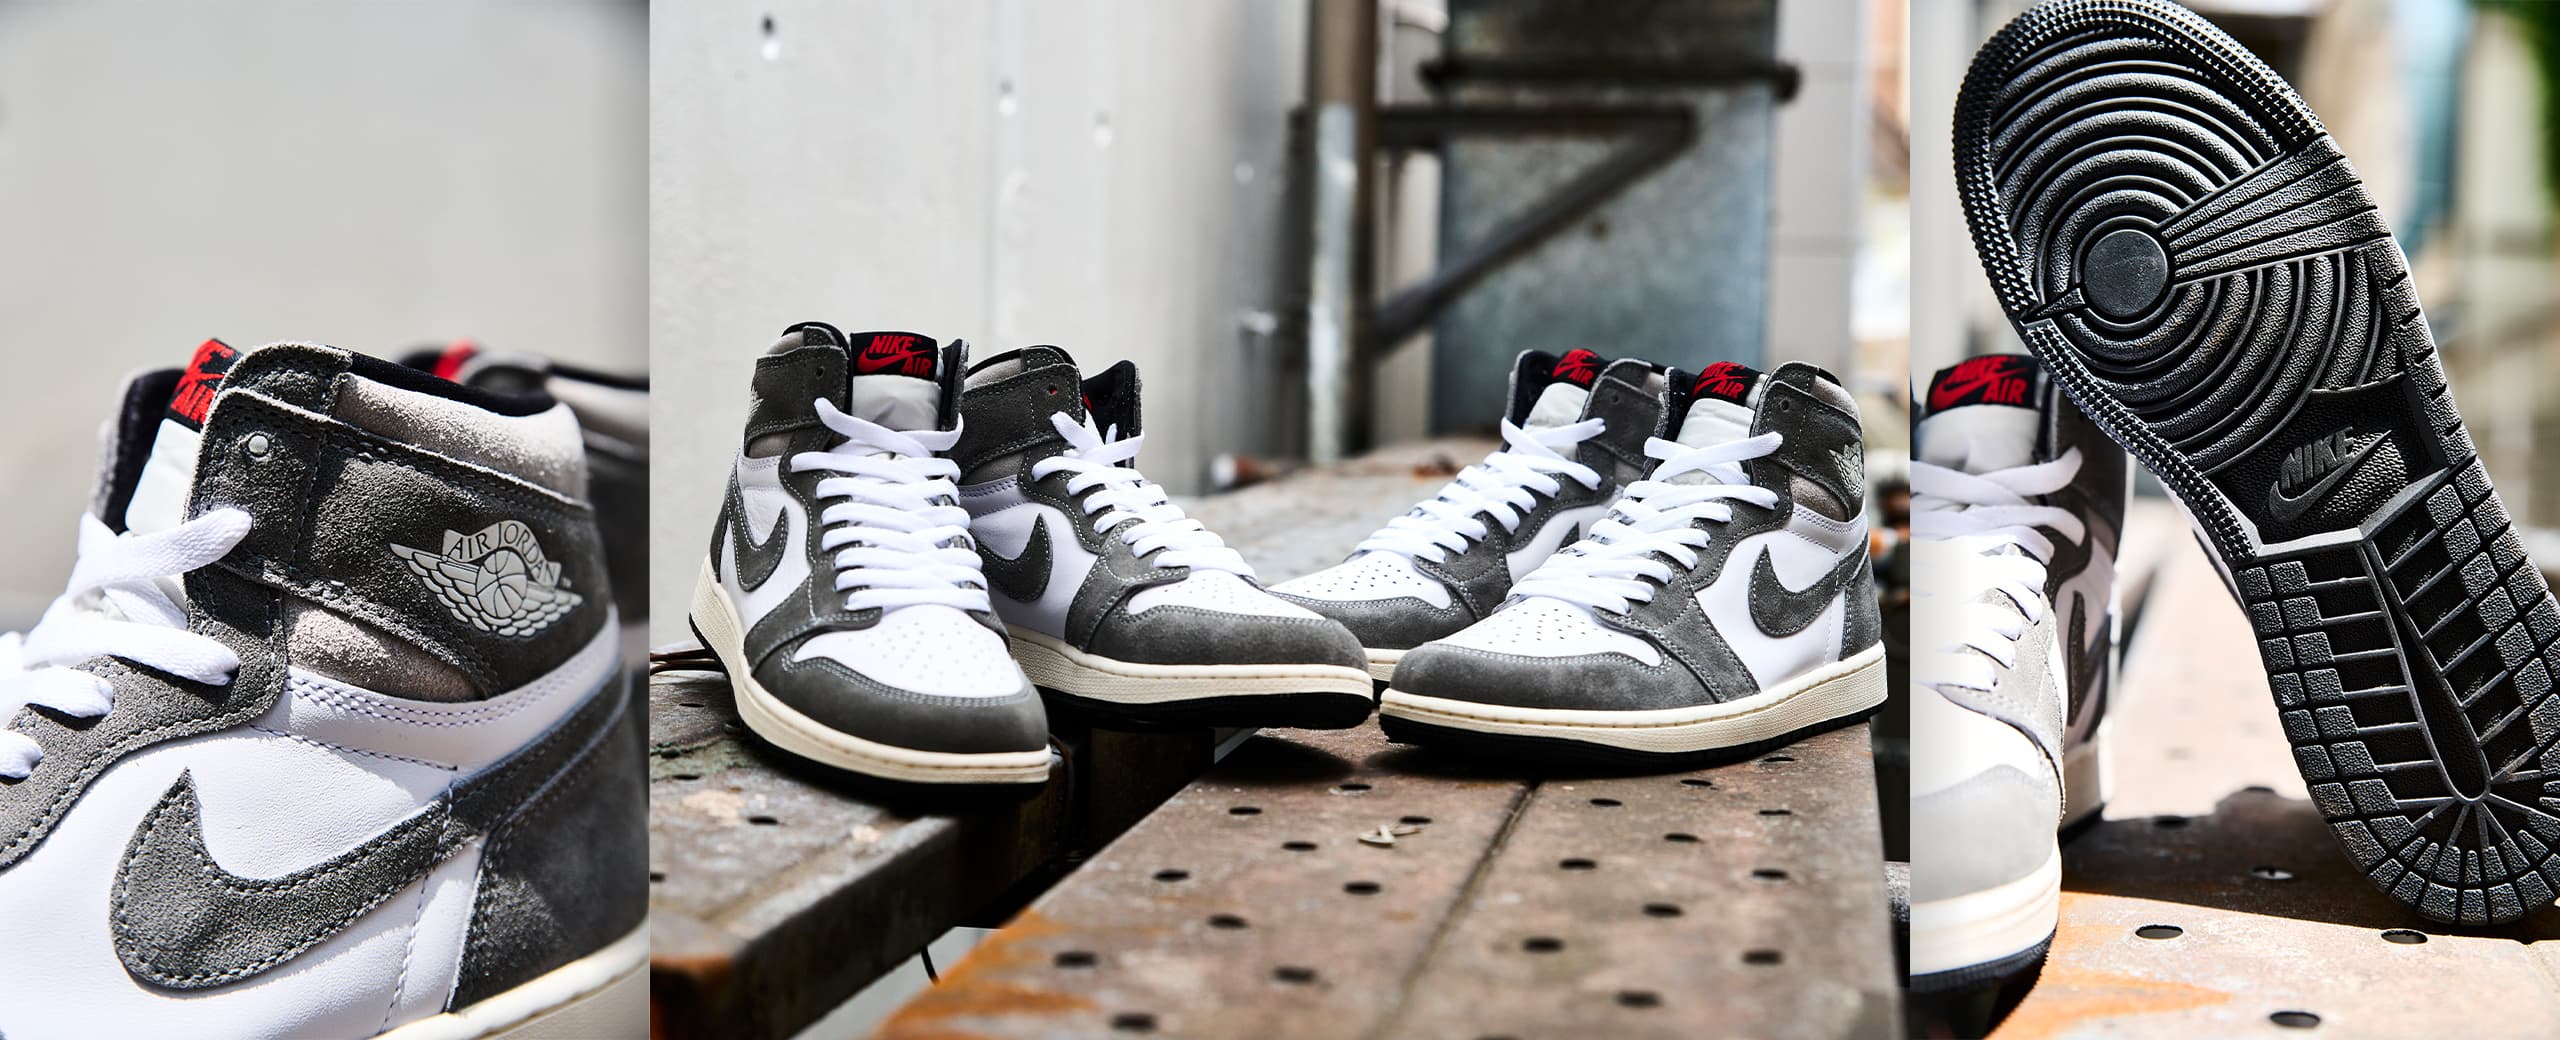 Nike Air Jordan 1  Black and Smoke Greyありましたら再度連絡いたします